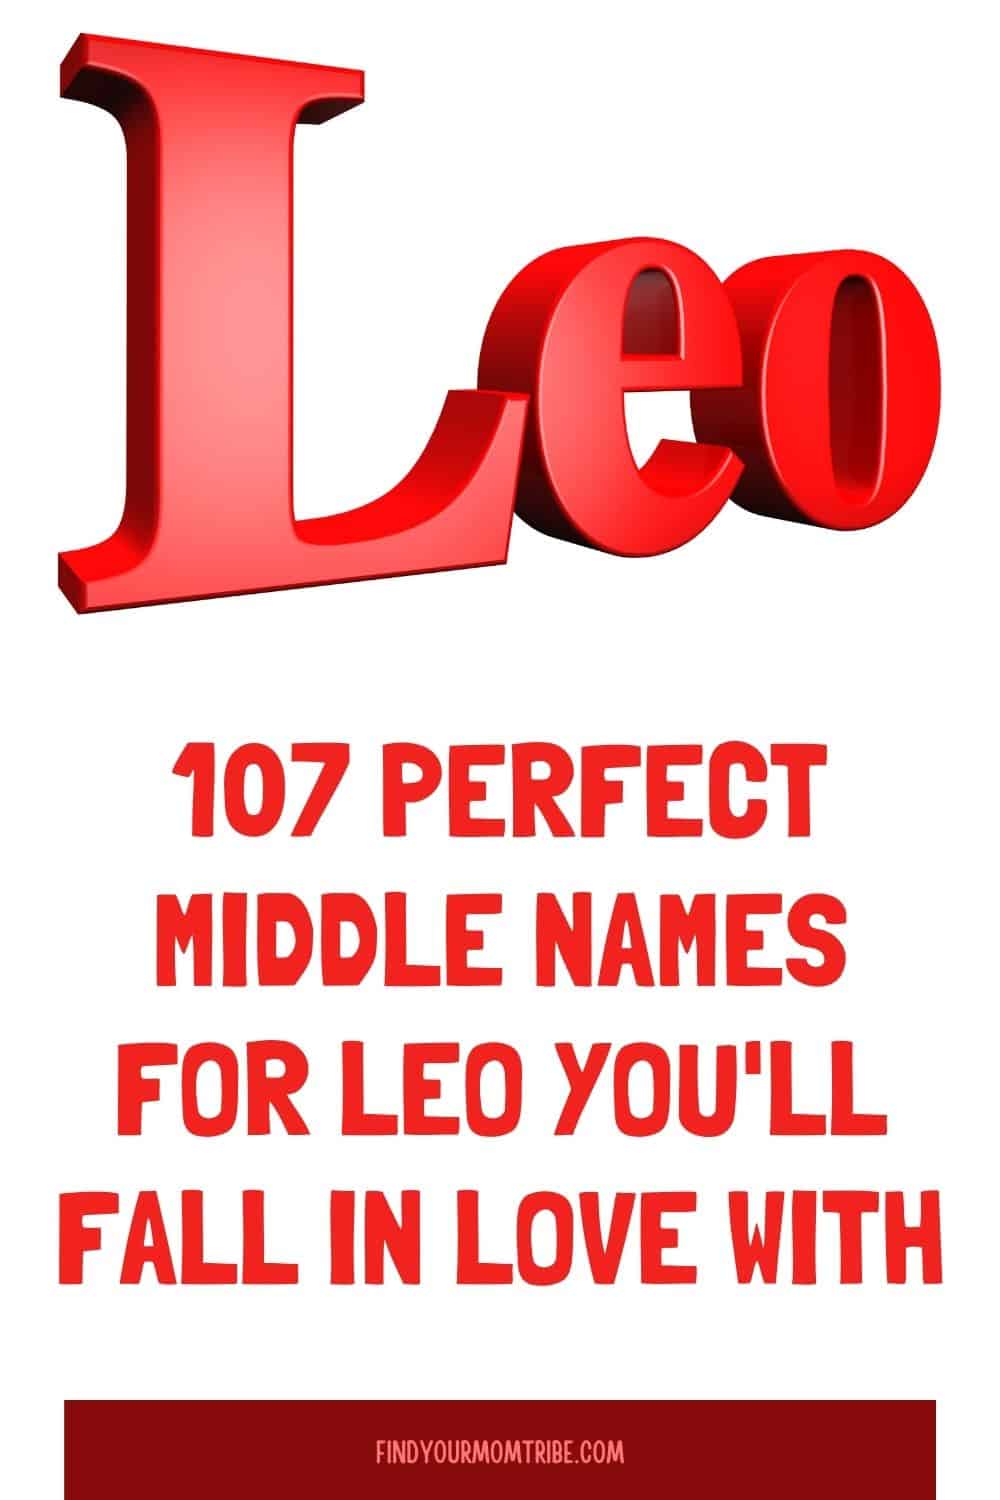 Pinterest middle names for leo 